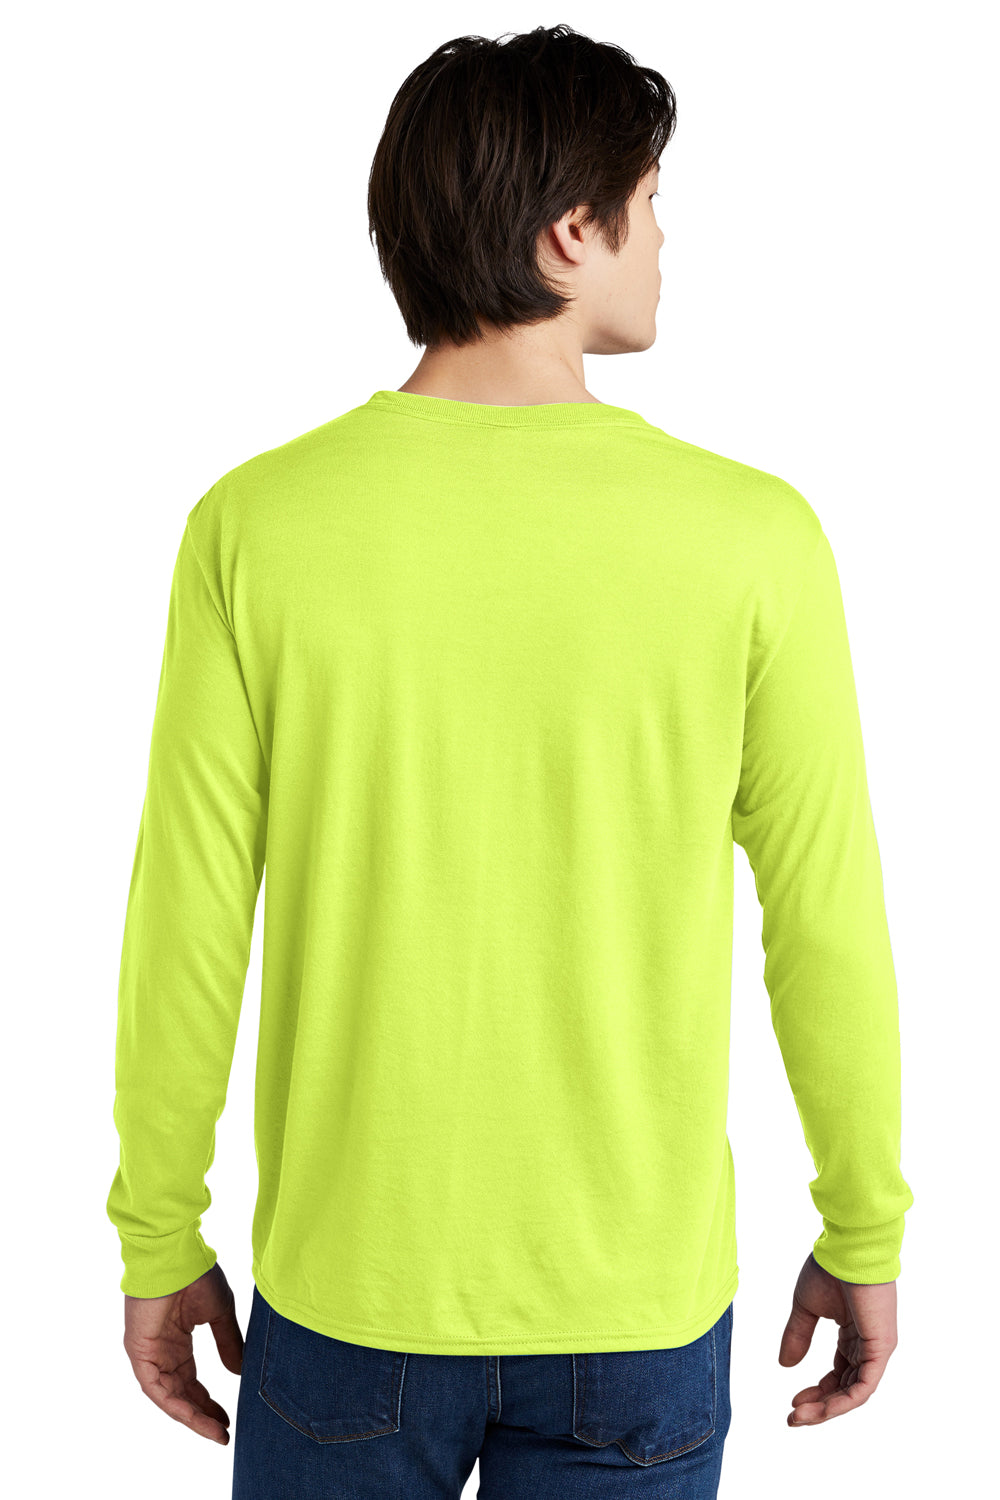 Jerzees 21LS Dri-Power Long Sleeve Crewneck T-Shirt Safety Green Back